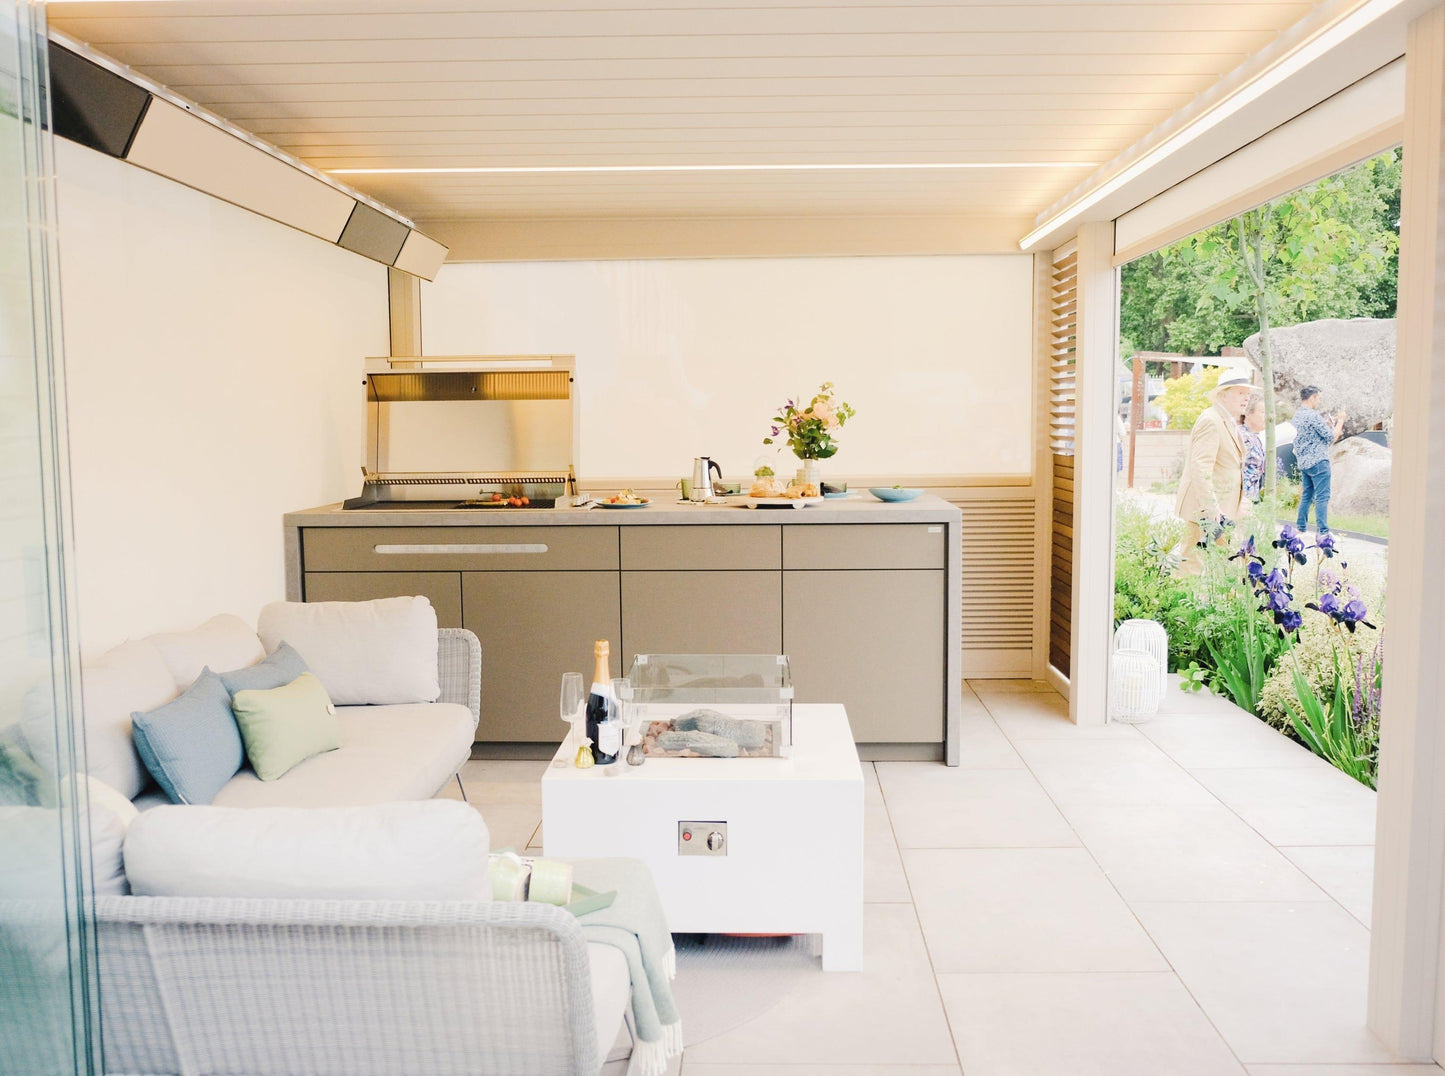 Cubic Outdoor Living Kitchen - C1 Style - Garden House Design